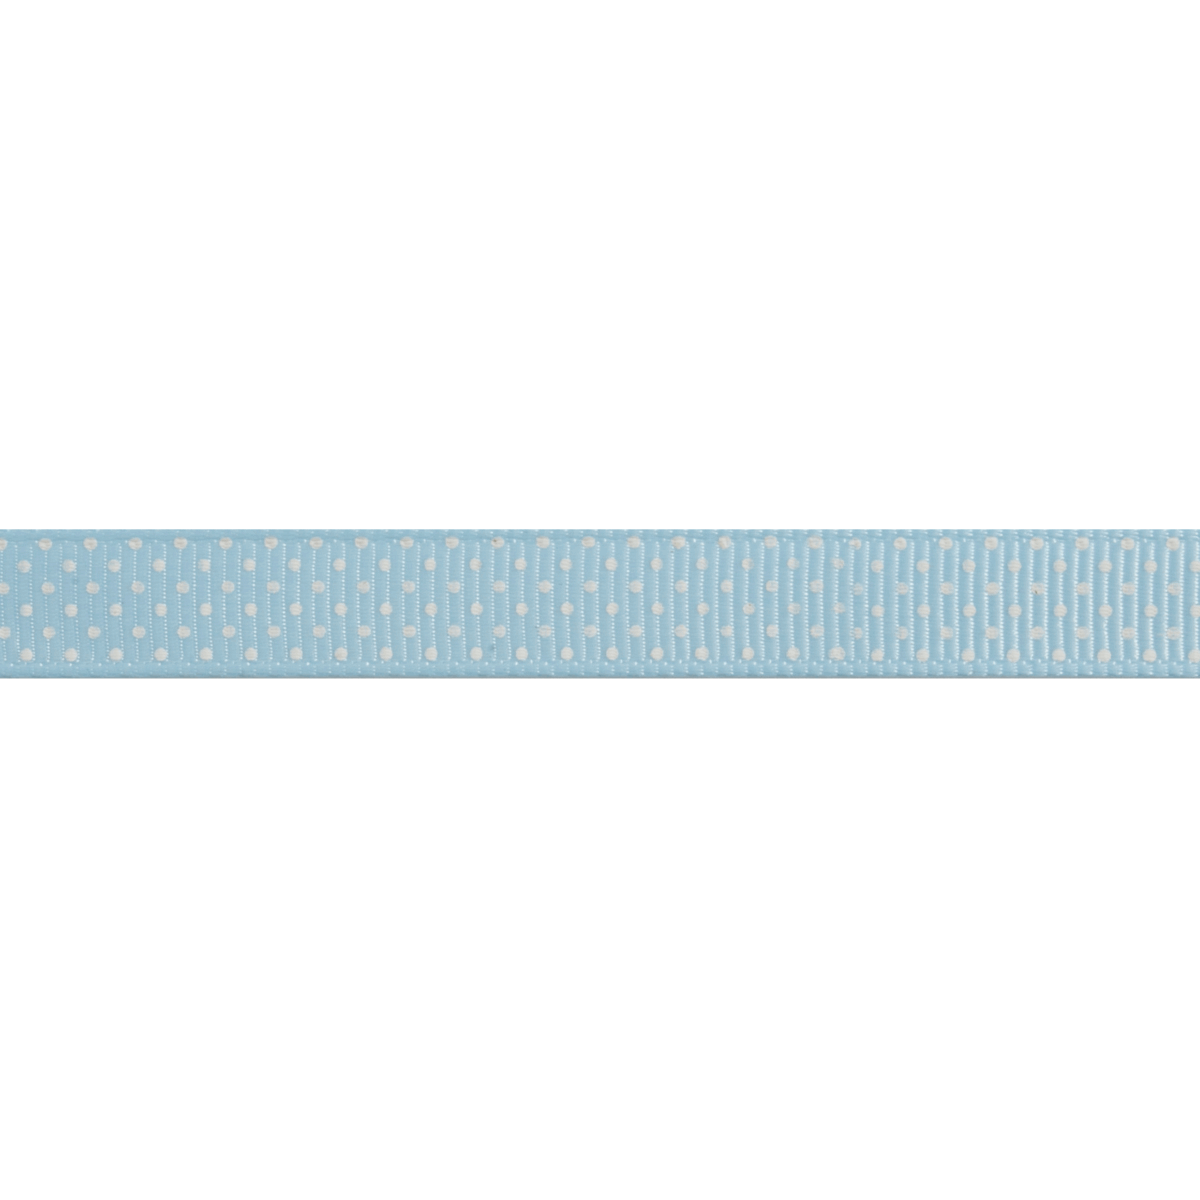 Bowtique Small Blue Polka Dot Grosgrain Ribbon - 5m x 10mm Roll